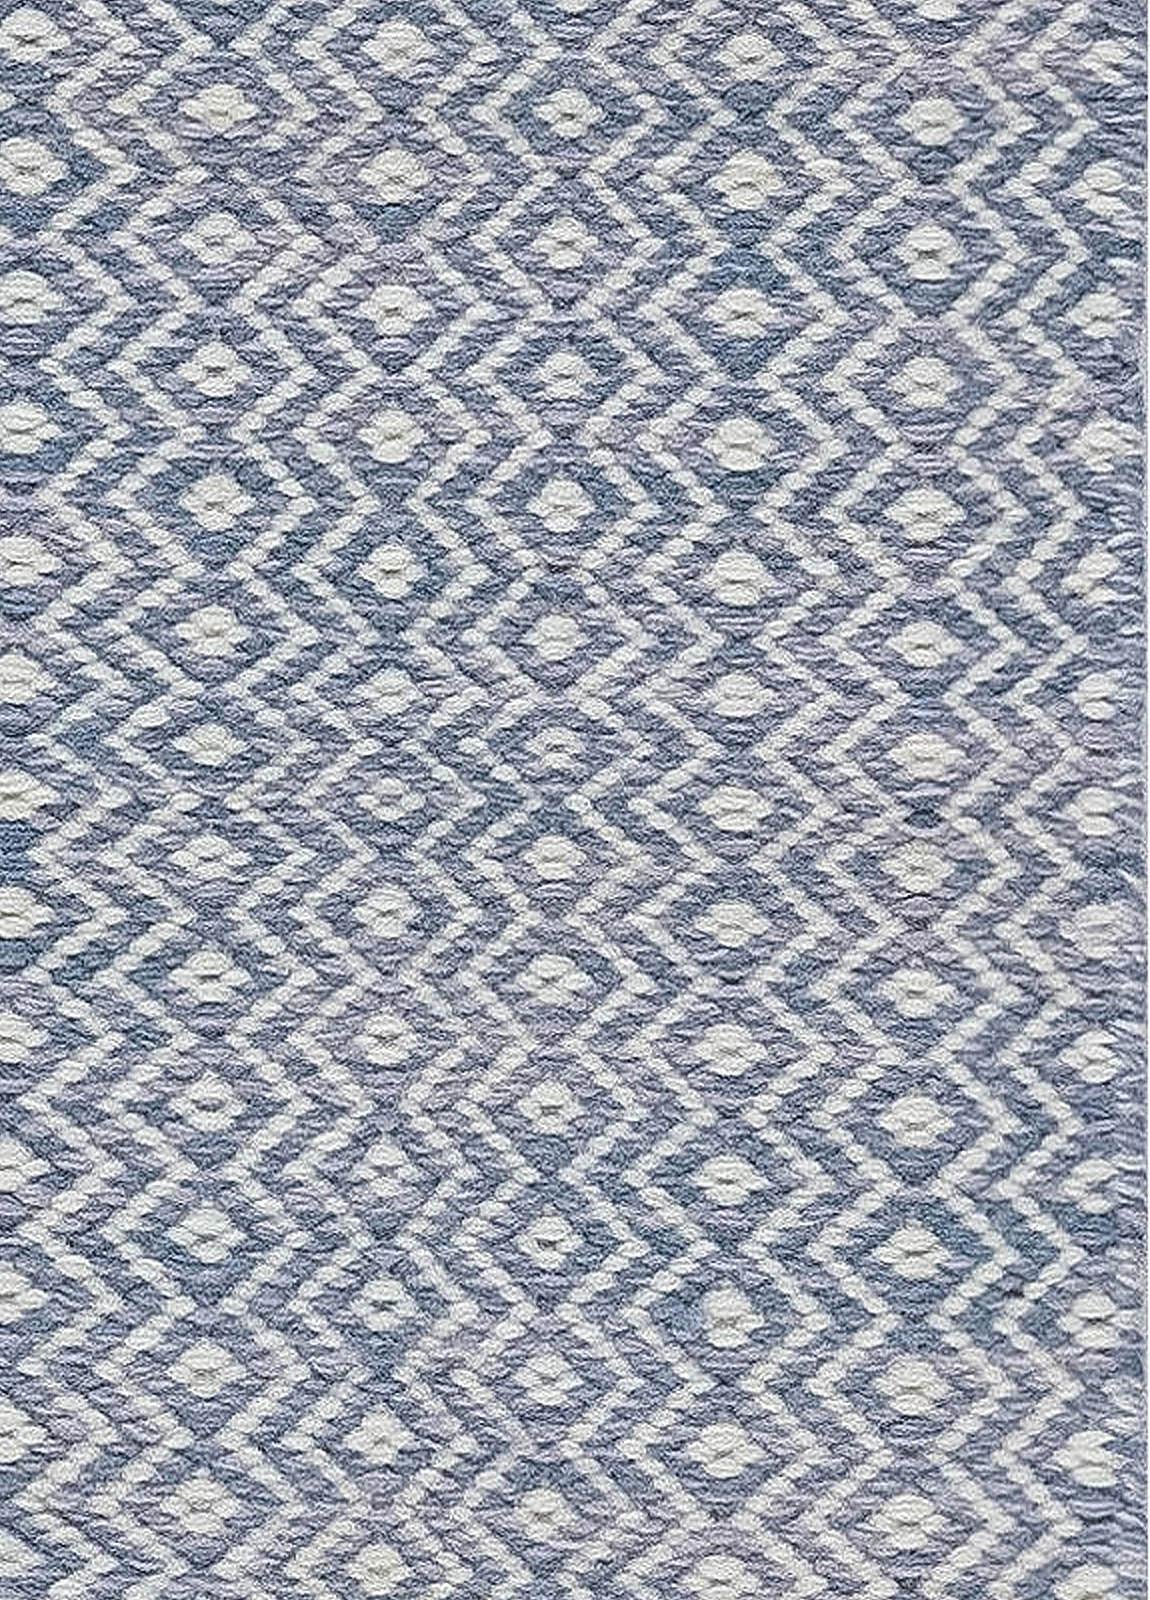 Contemporary custom flat weave wool rug by Doris Leslie Blau
Size: 3'1